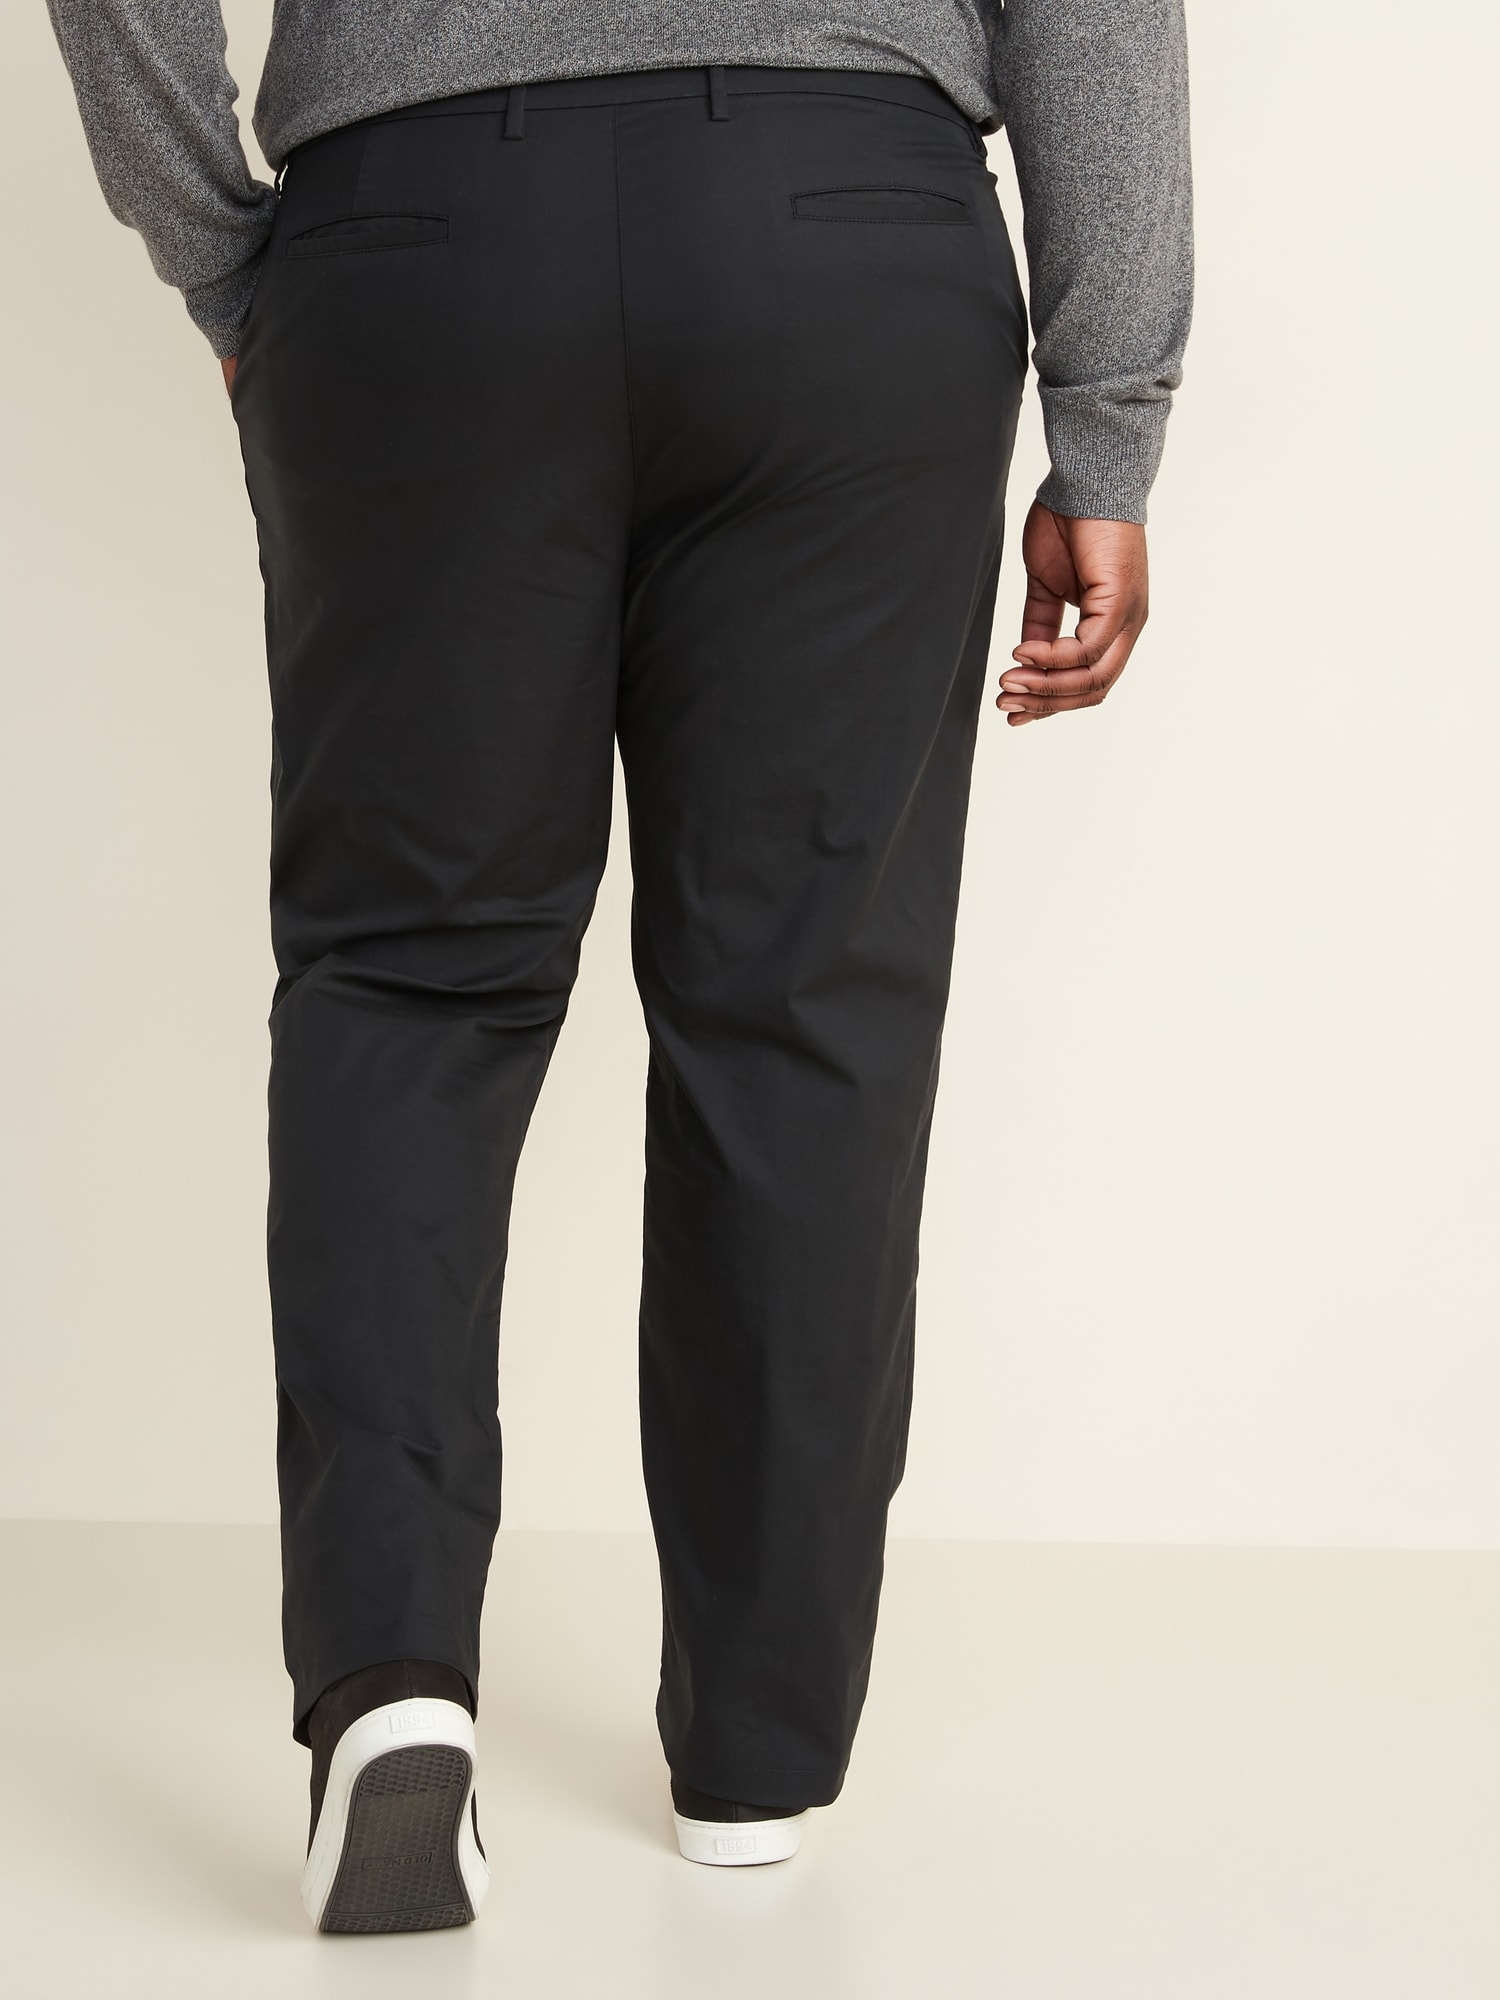 Slim Built-In Flex Ultimate Tech Chino Pants